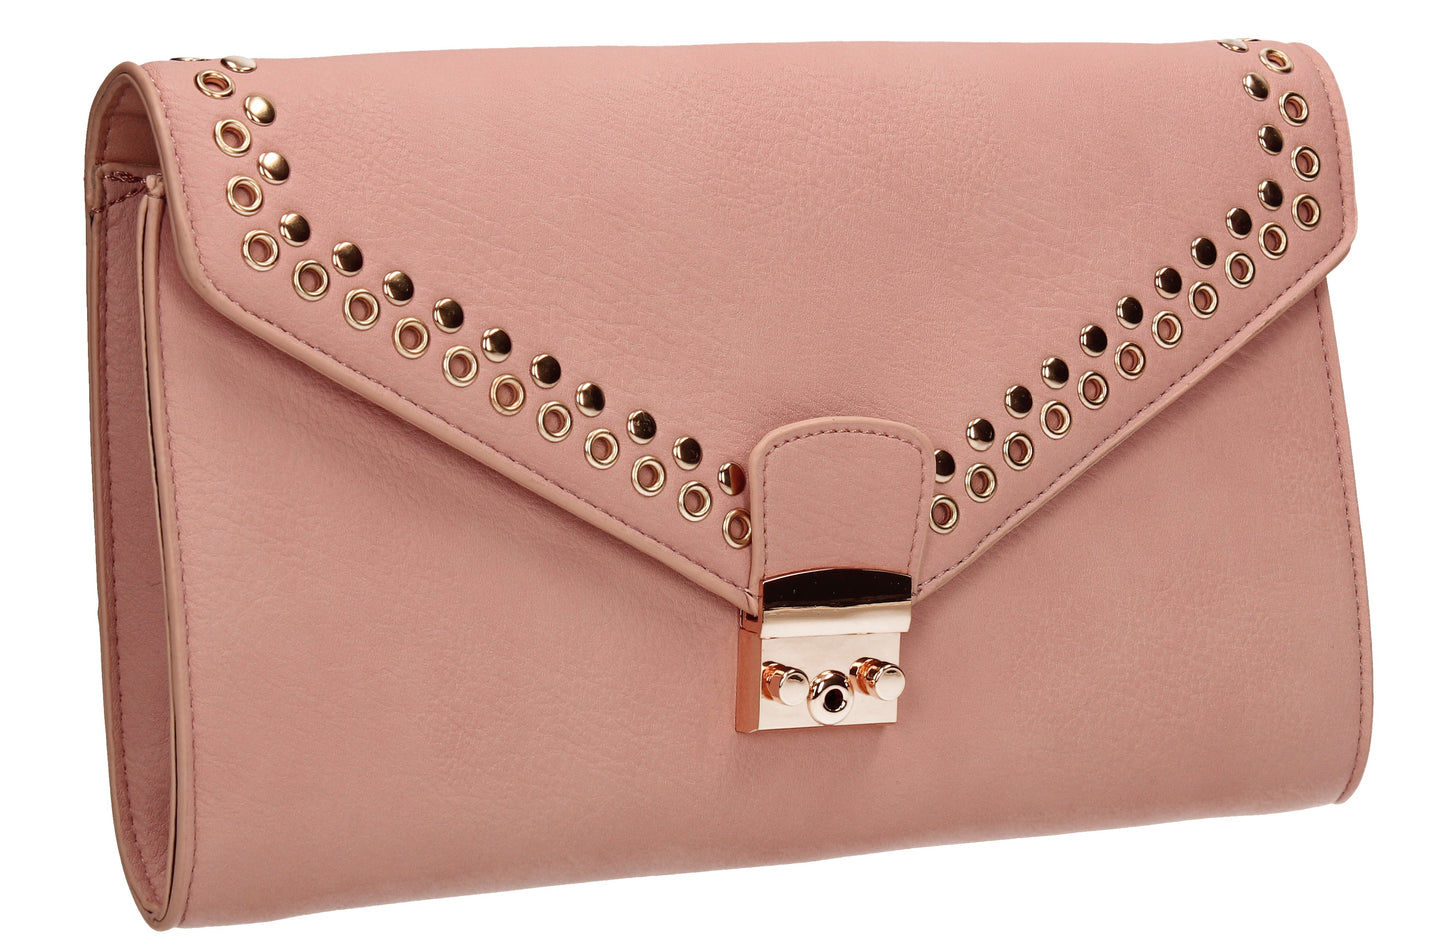 SWANKYSWANS Beni Clutch Bag Pink Cute Cheap Clutch Bag For Weddings School and Work